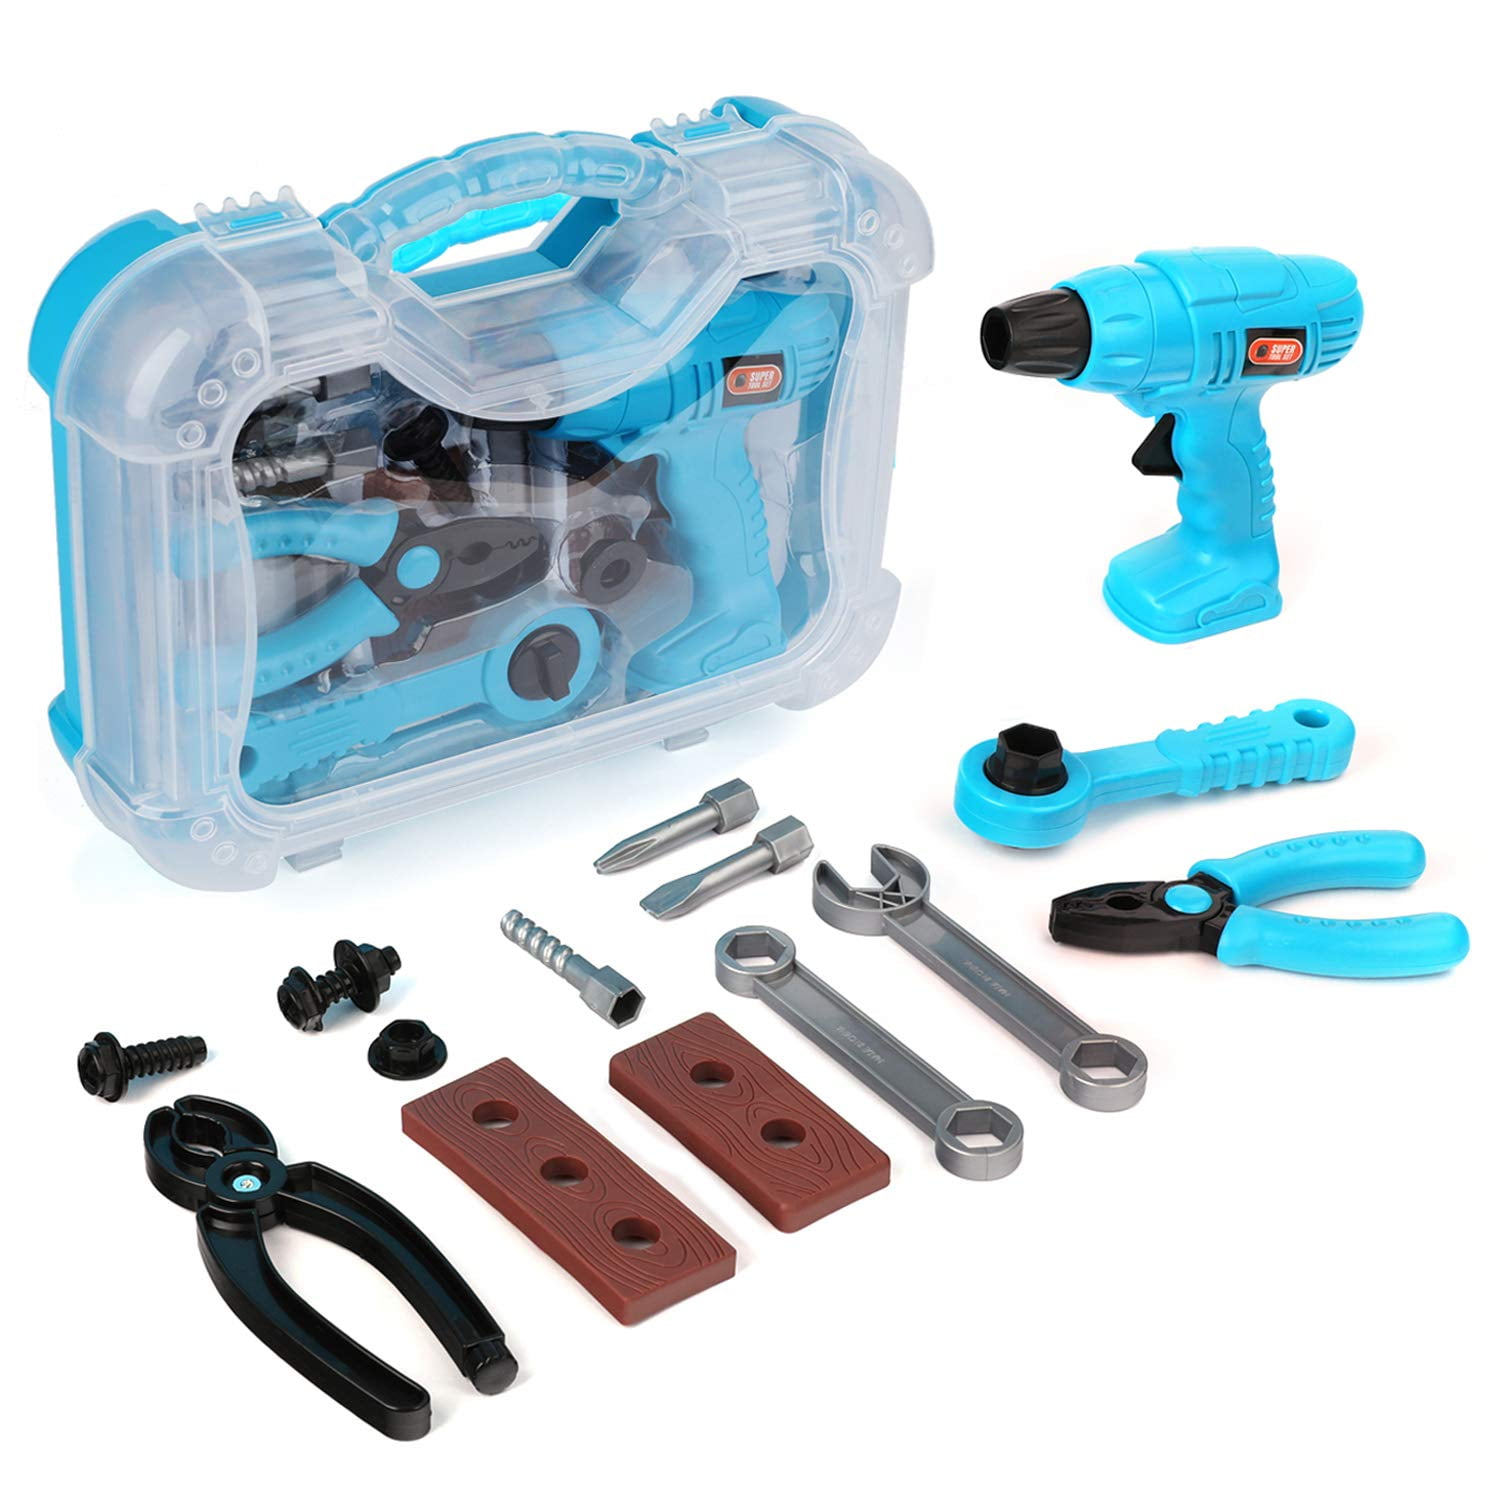 Repair Toy Tools Set Kids Gift Preschool Pretend Play 14pcs Plastic Screwdriver 